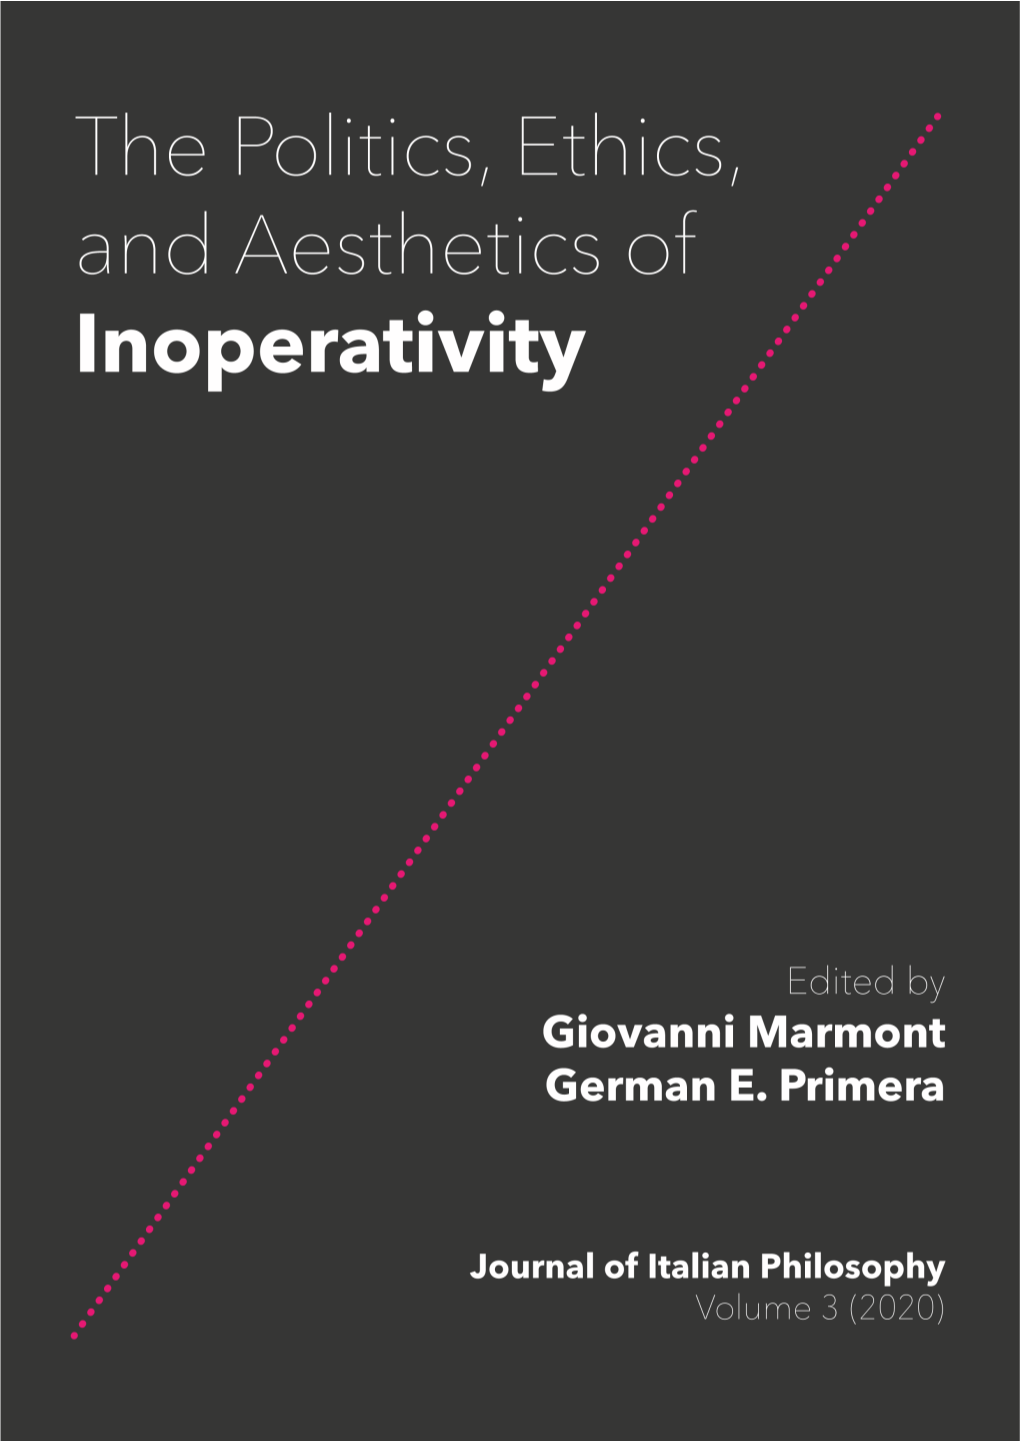 Volume 3 (2020): the Politics, Ethics, and Aesthetics of Inoperativity